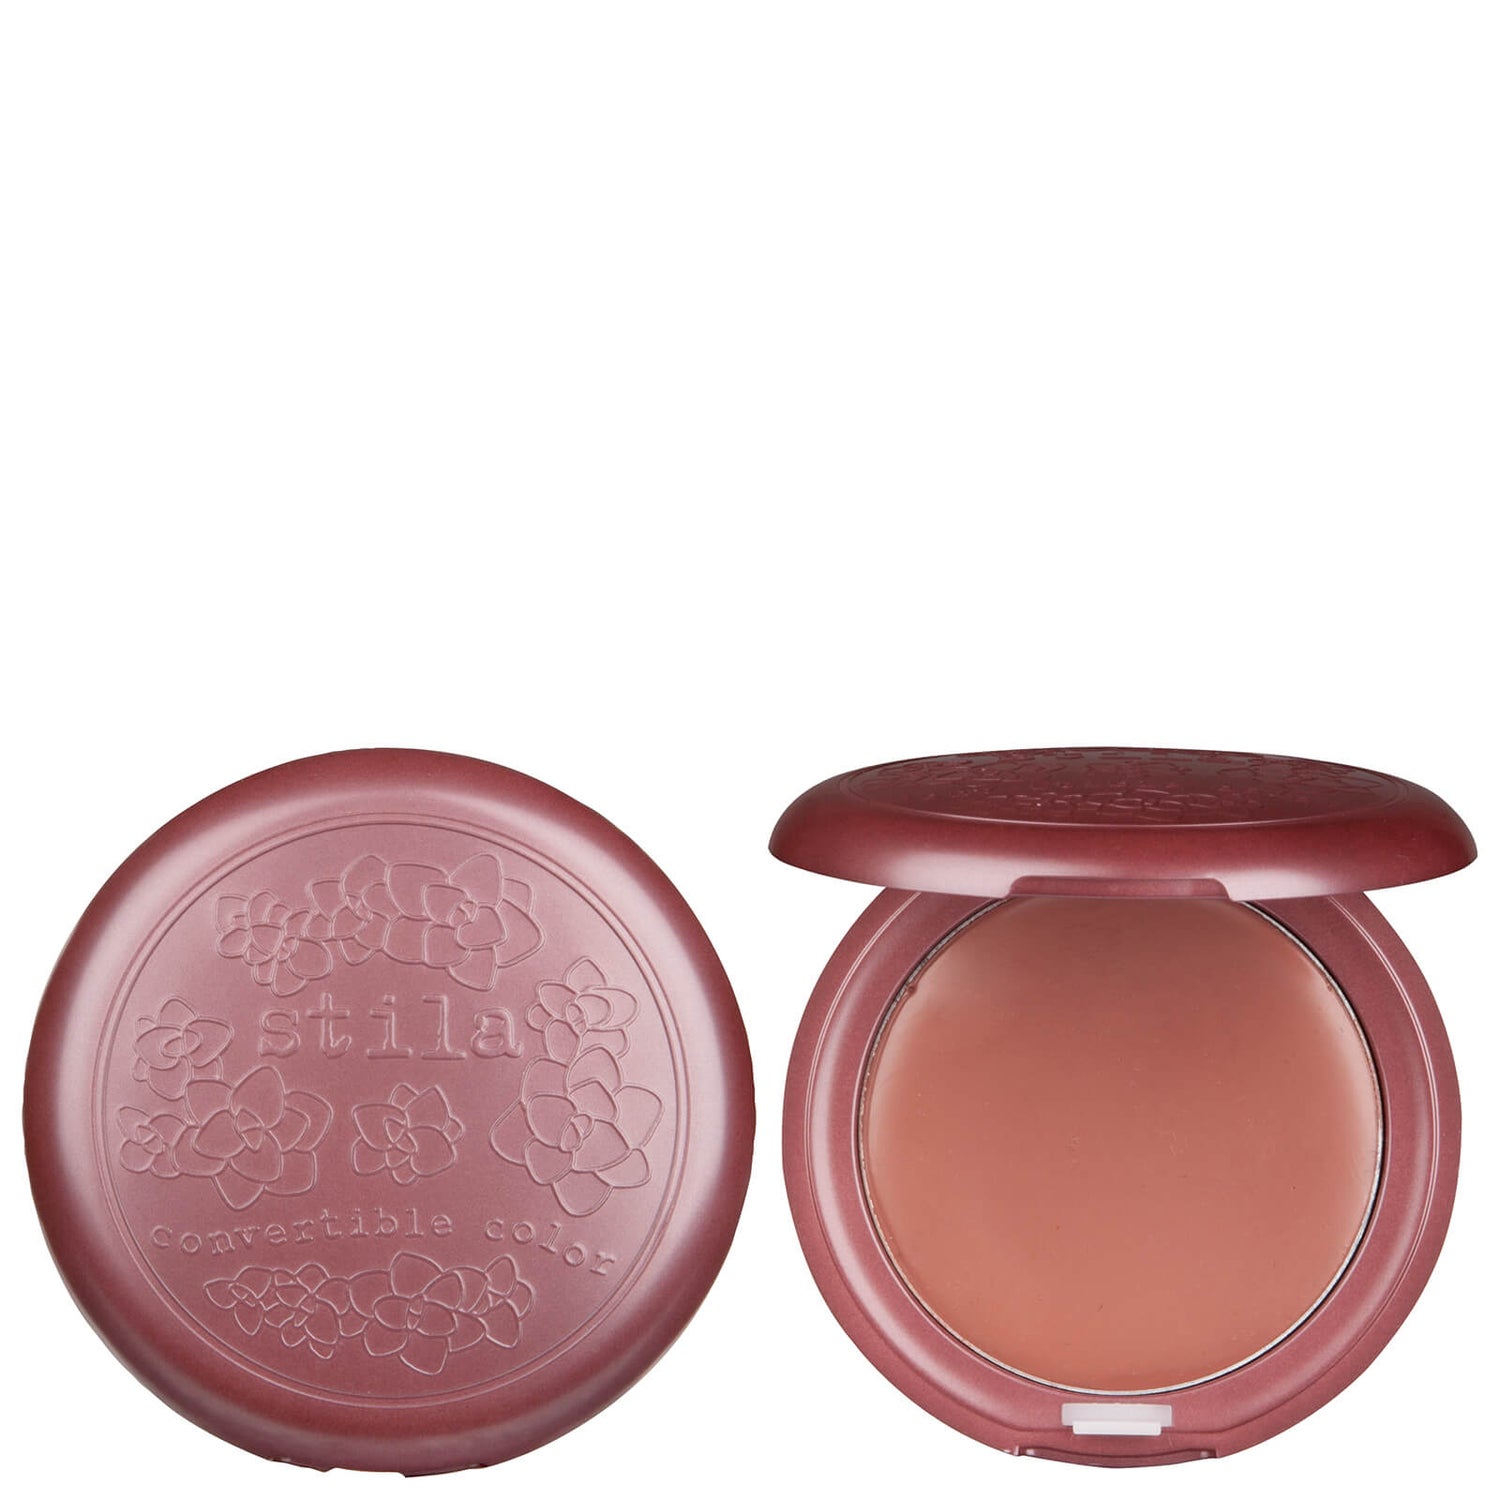 Stila Convertible Colour Dual Lip and Cheek Cream - Magnolia 4.25g